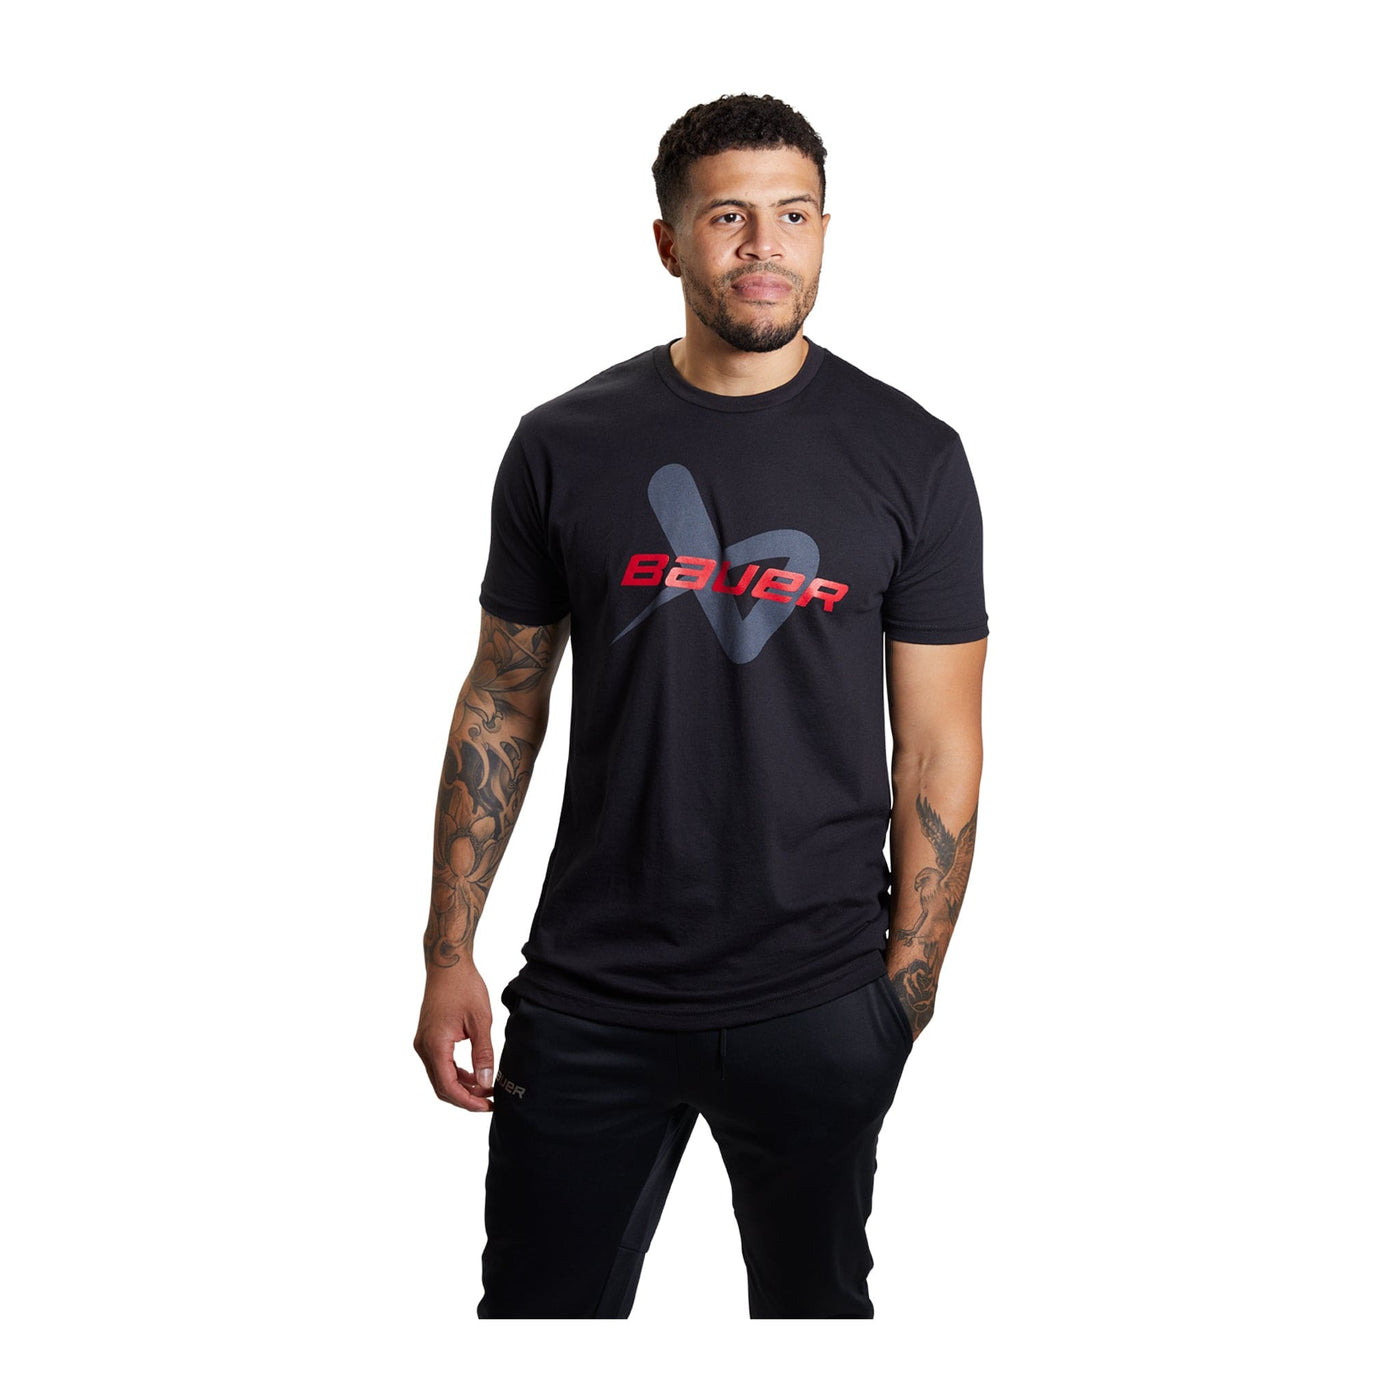 Bauer Lockup Mens Shortsleeve Shirt - The Hockey Shop Source For Sports